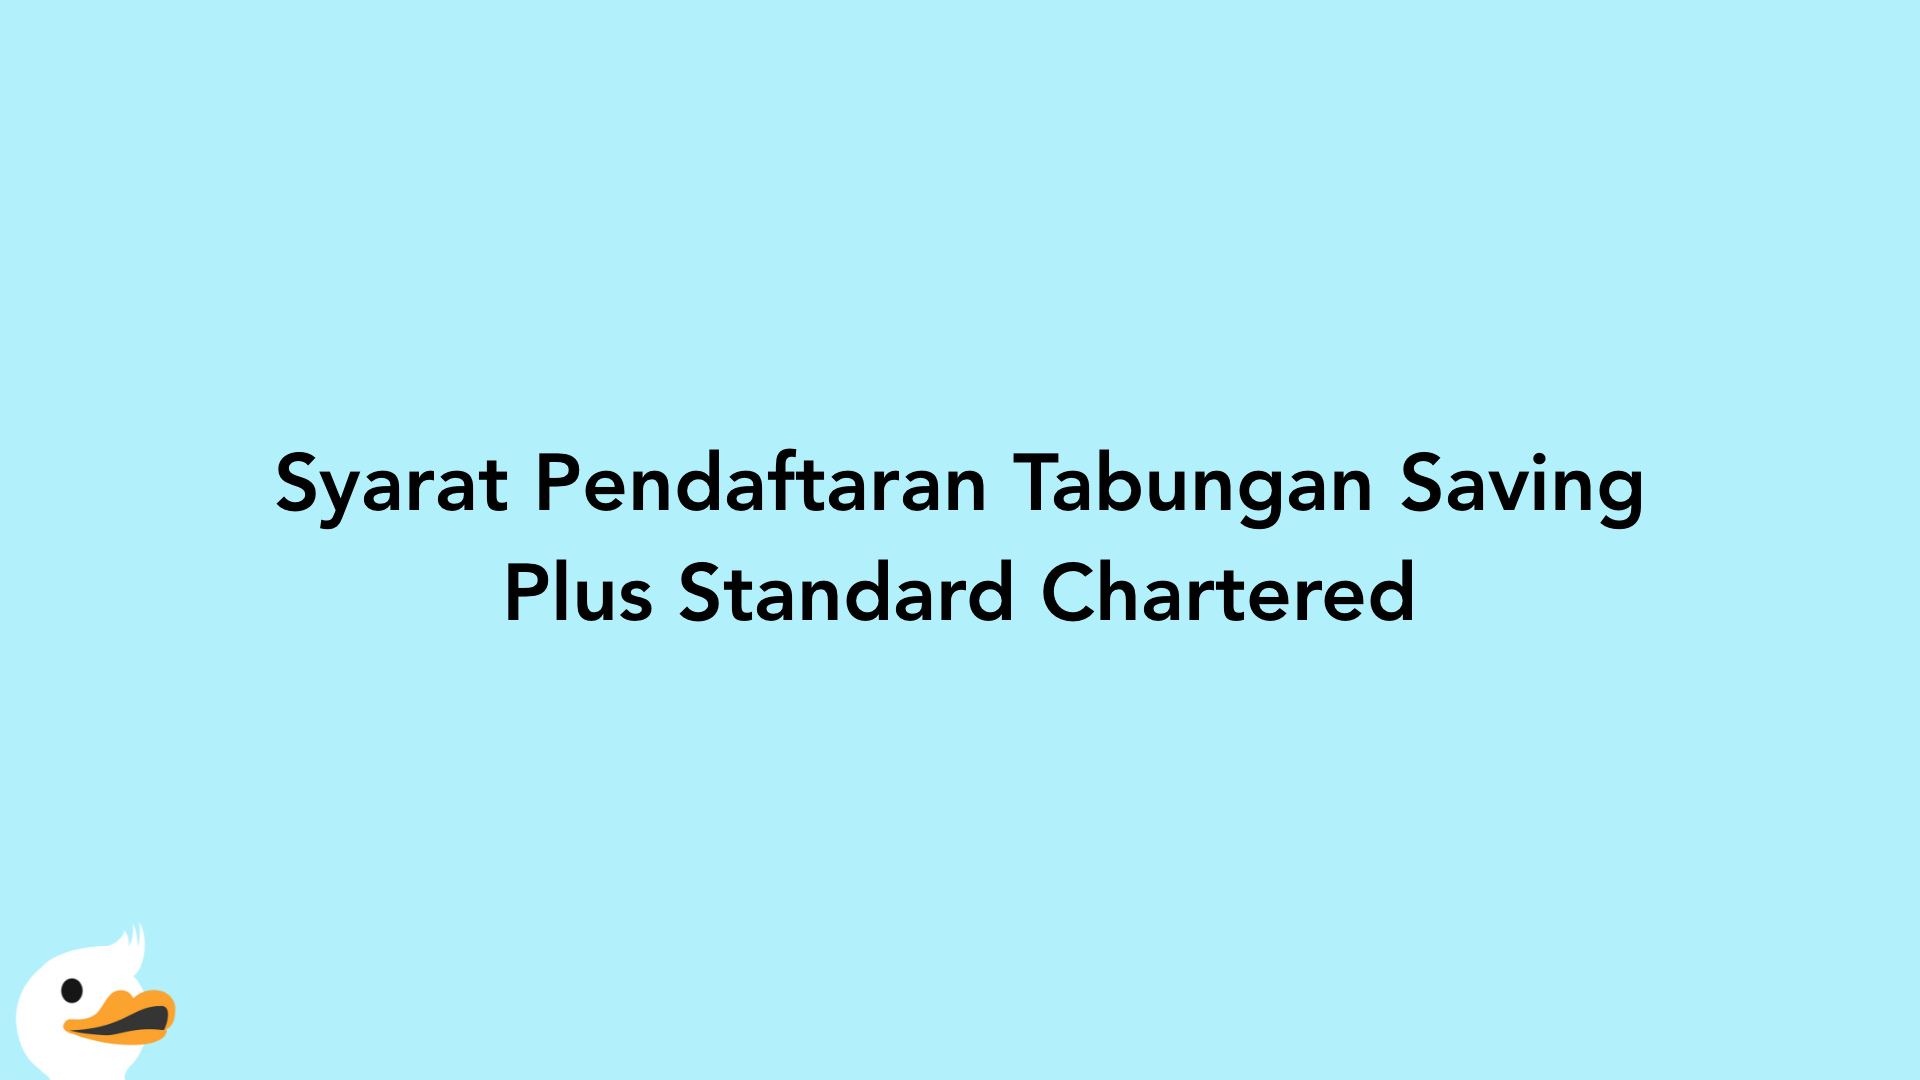 Syarat Pendaftaran Tabungan Saving Plus Standard Chartered